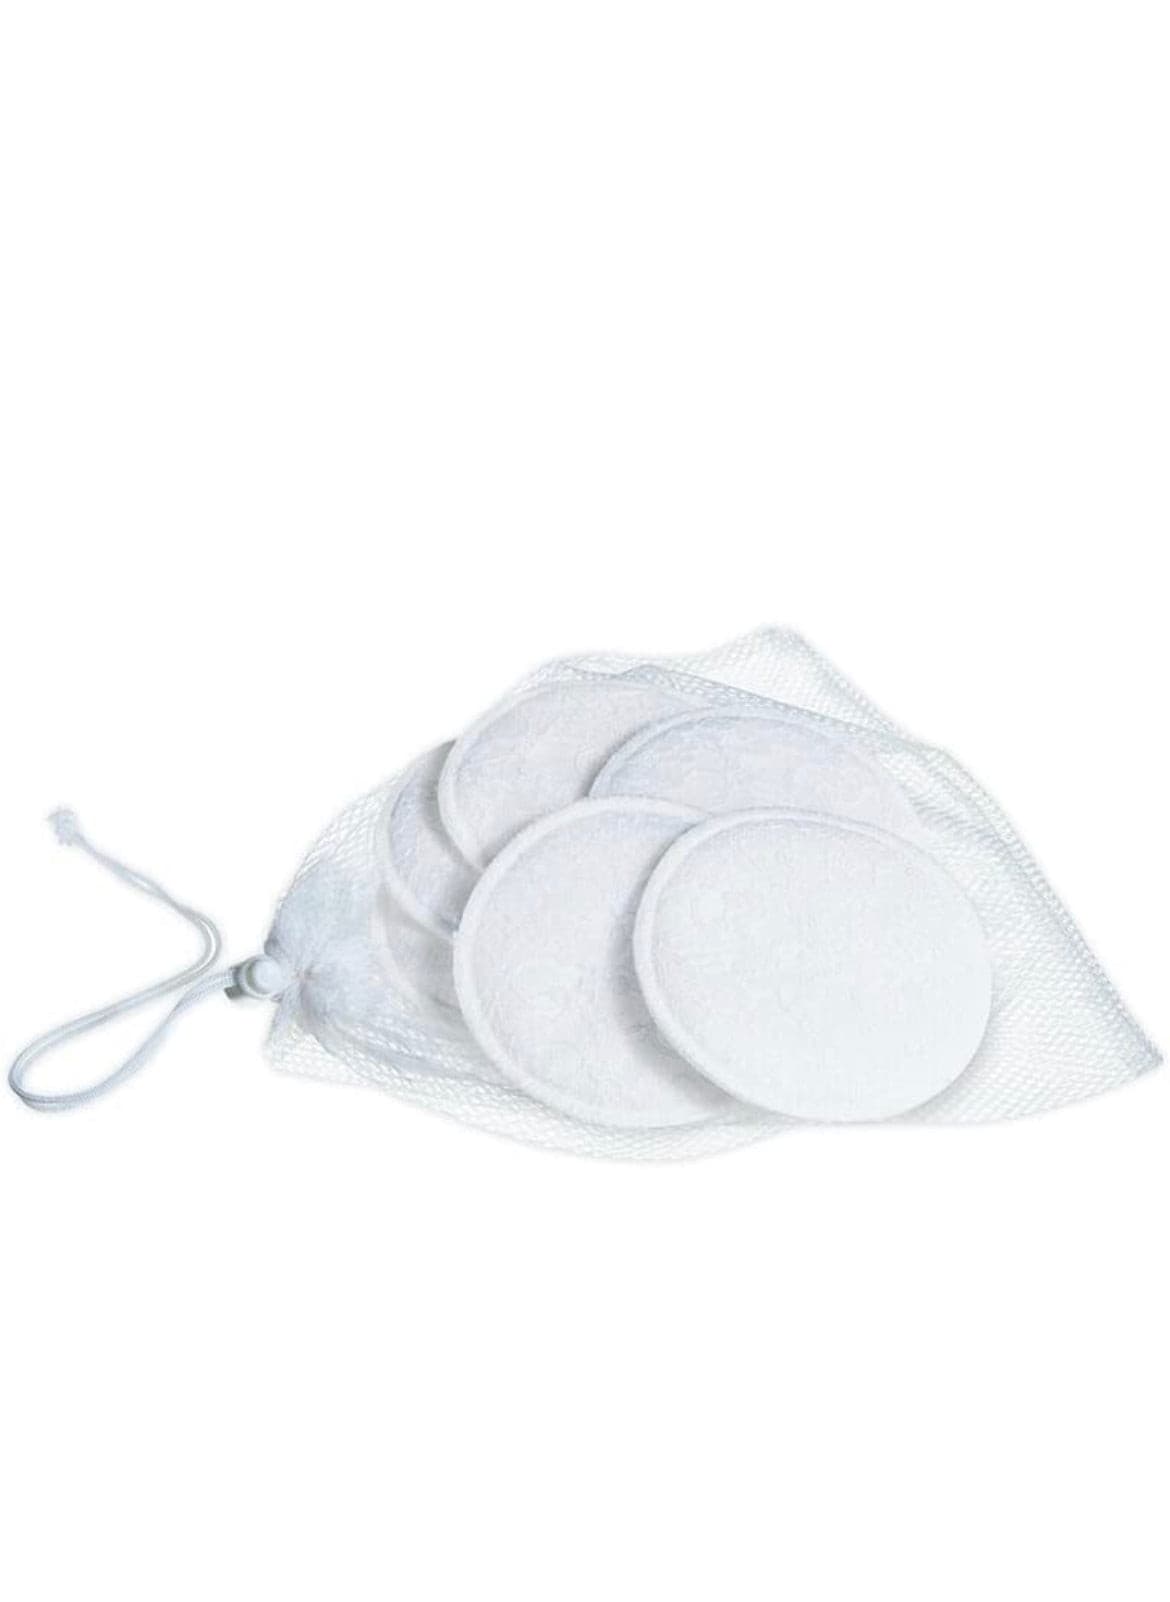 Avent 6 Pack Washable Nursing pads.